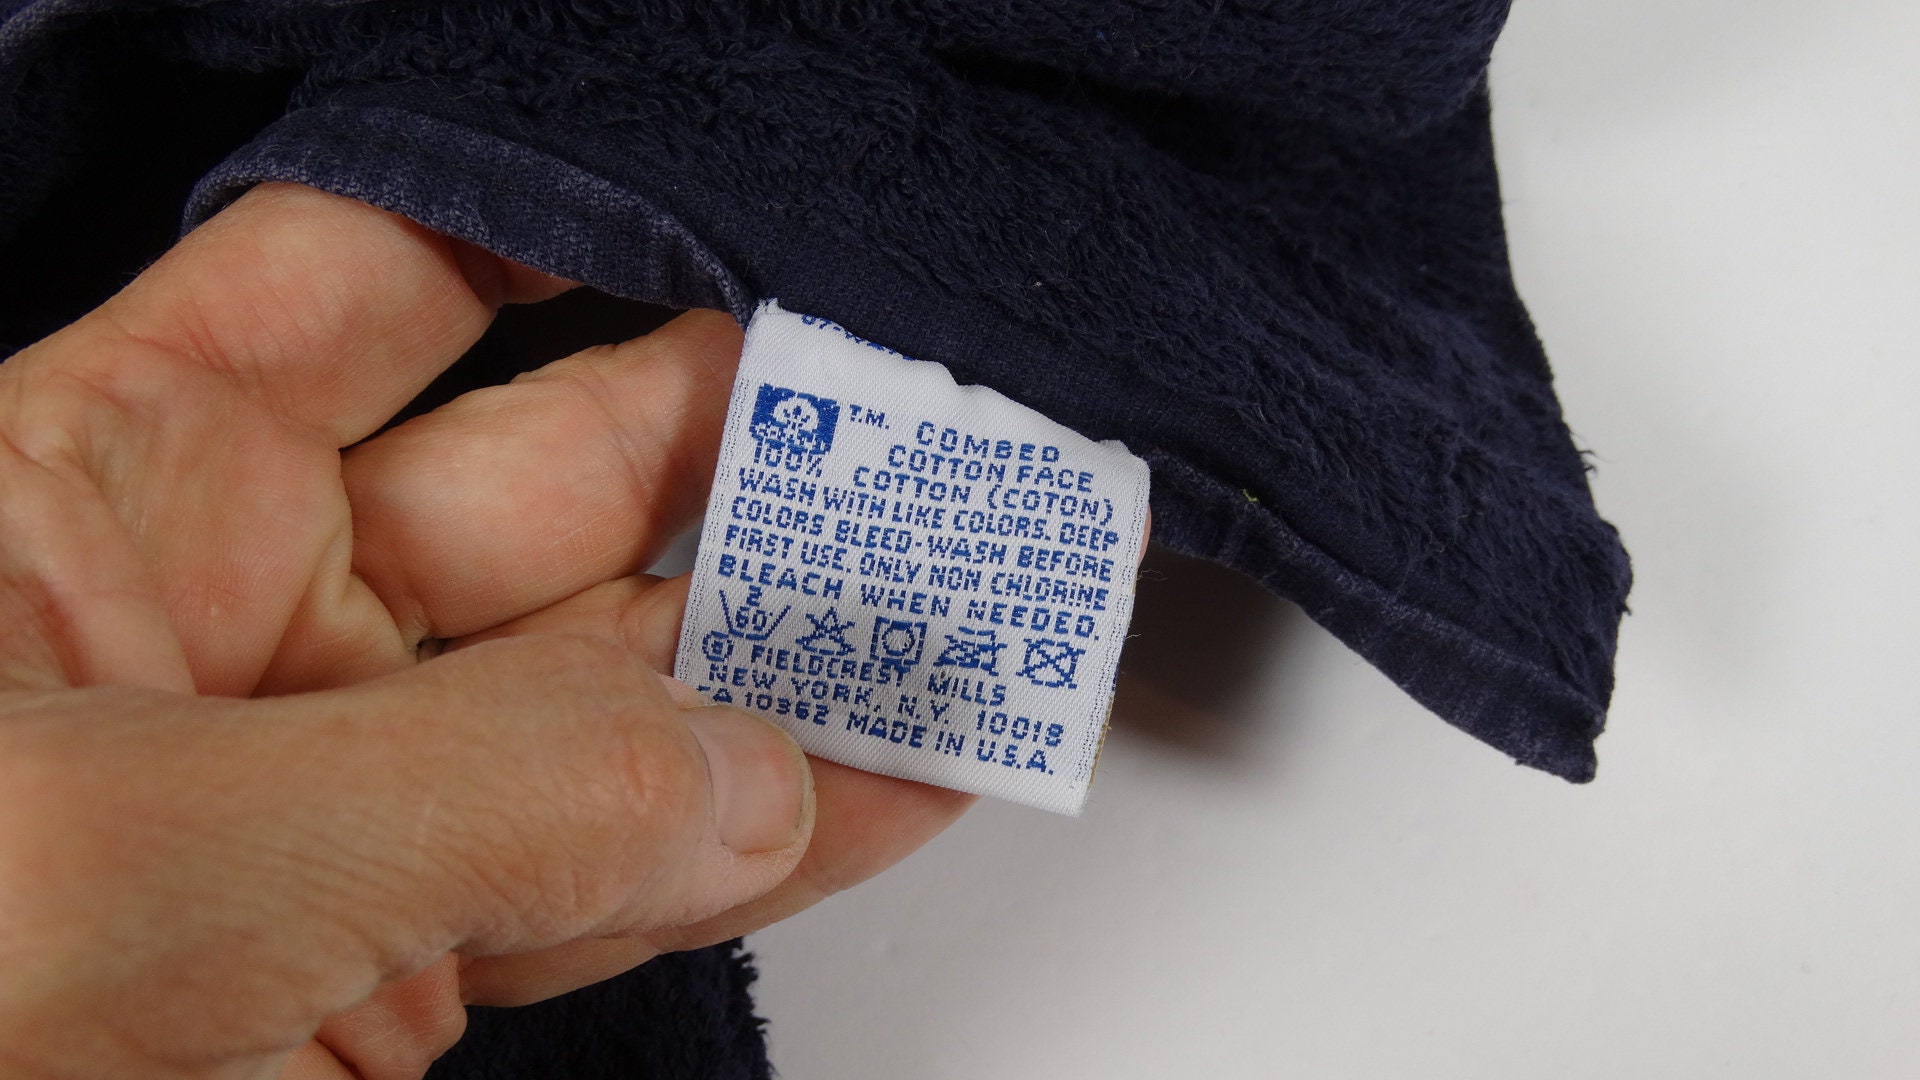 80s Navy Blue Towel Set 4 Pc Royal Velvet Towels and Washcloths